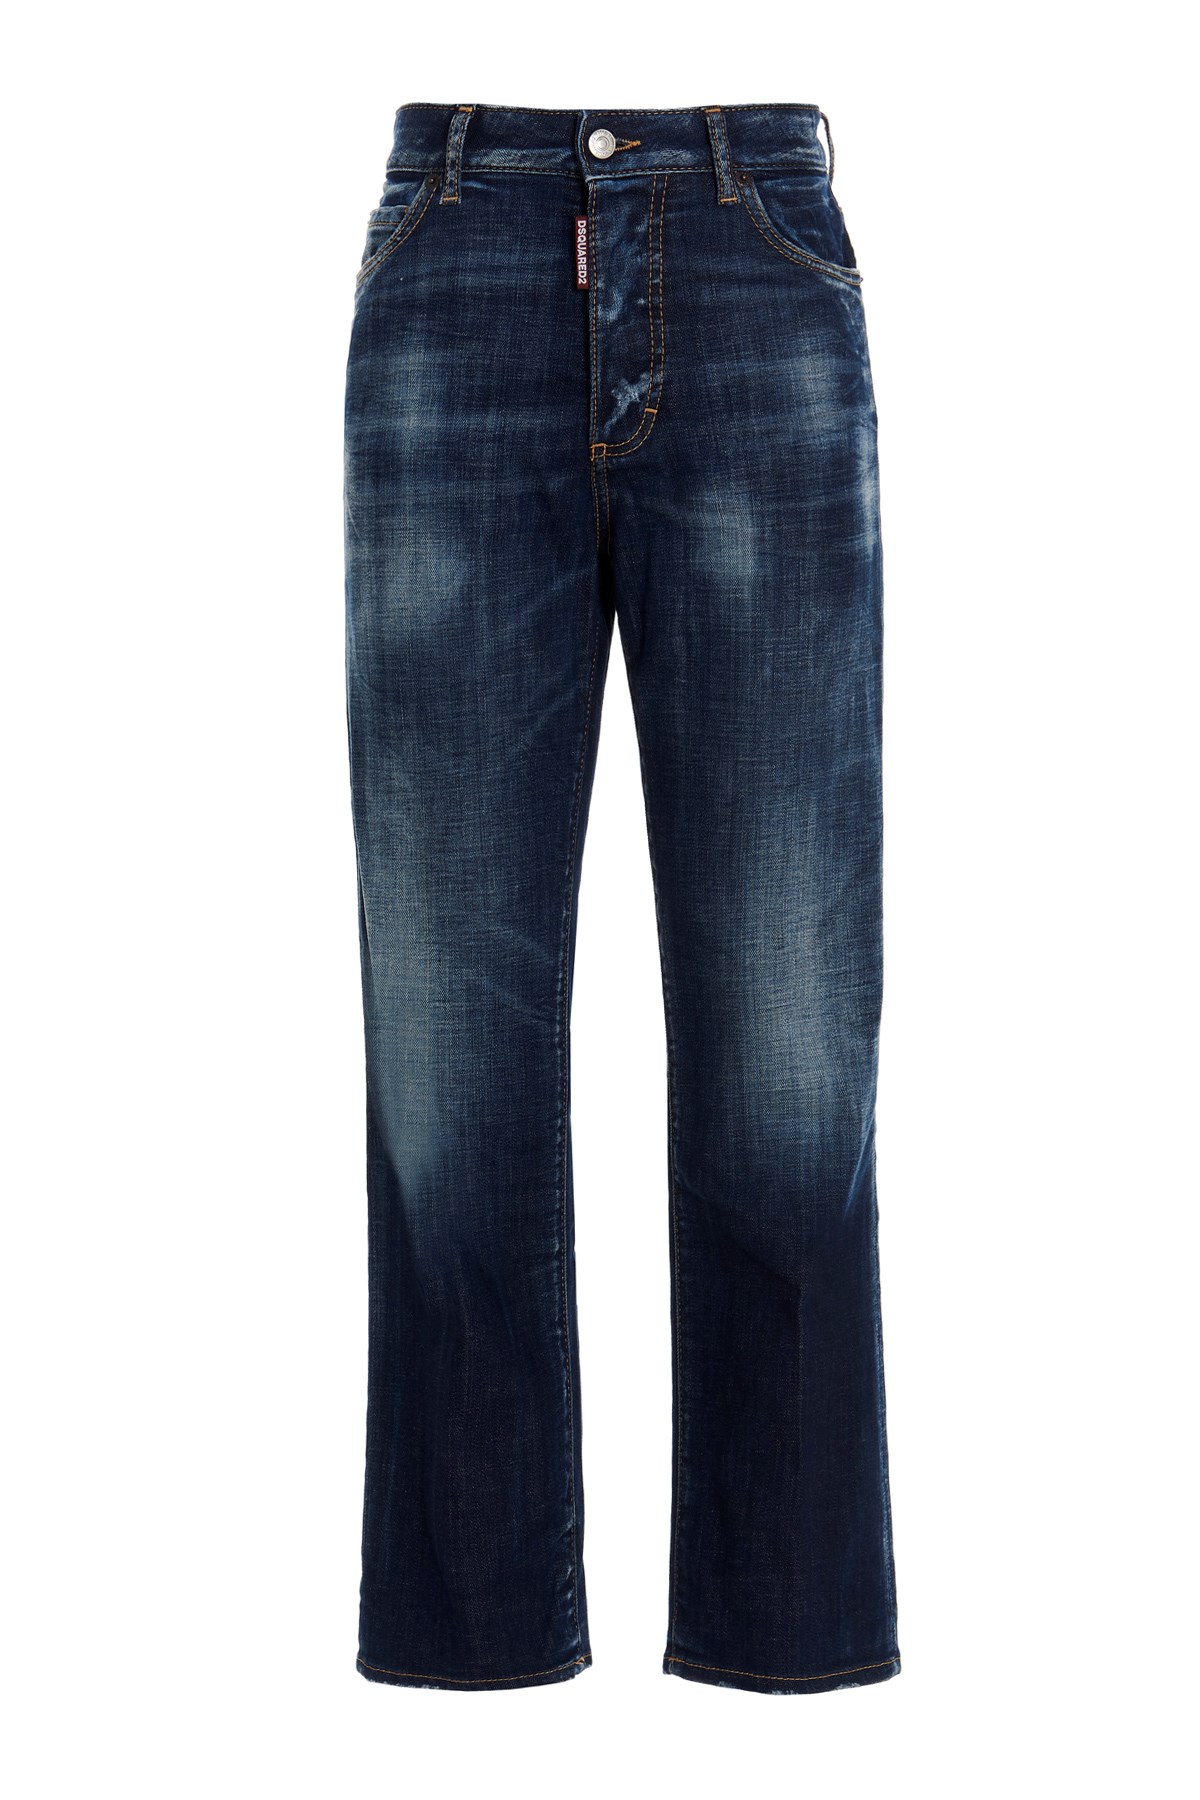 DSQUARED2 'Boston’ Jeans